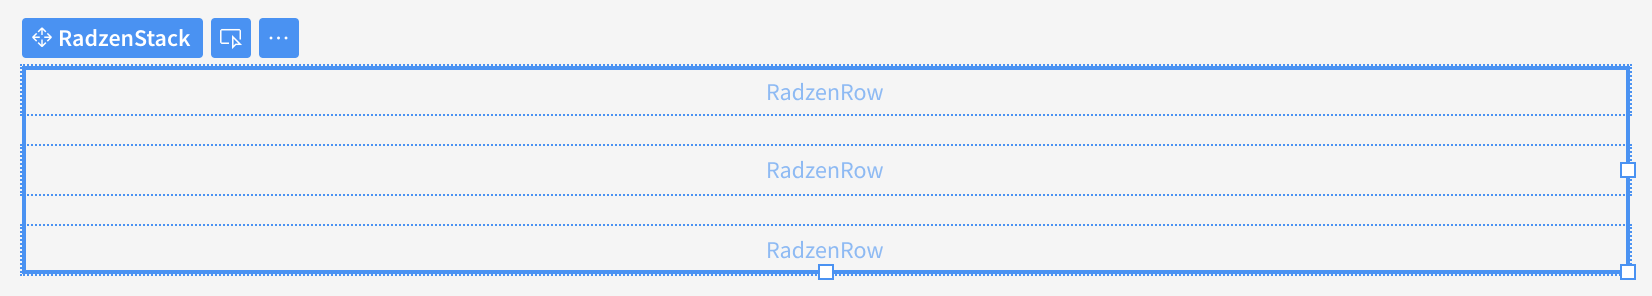 RadzenStack Component